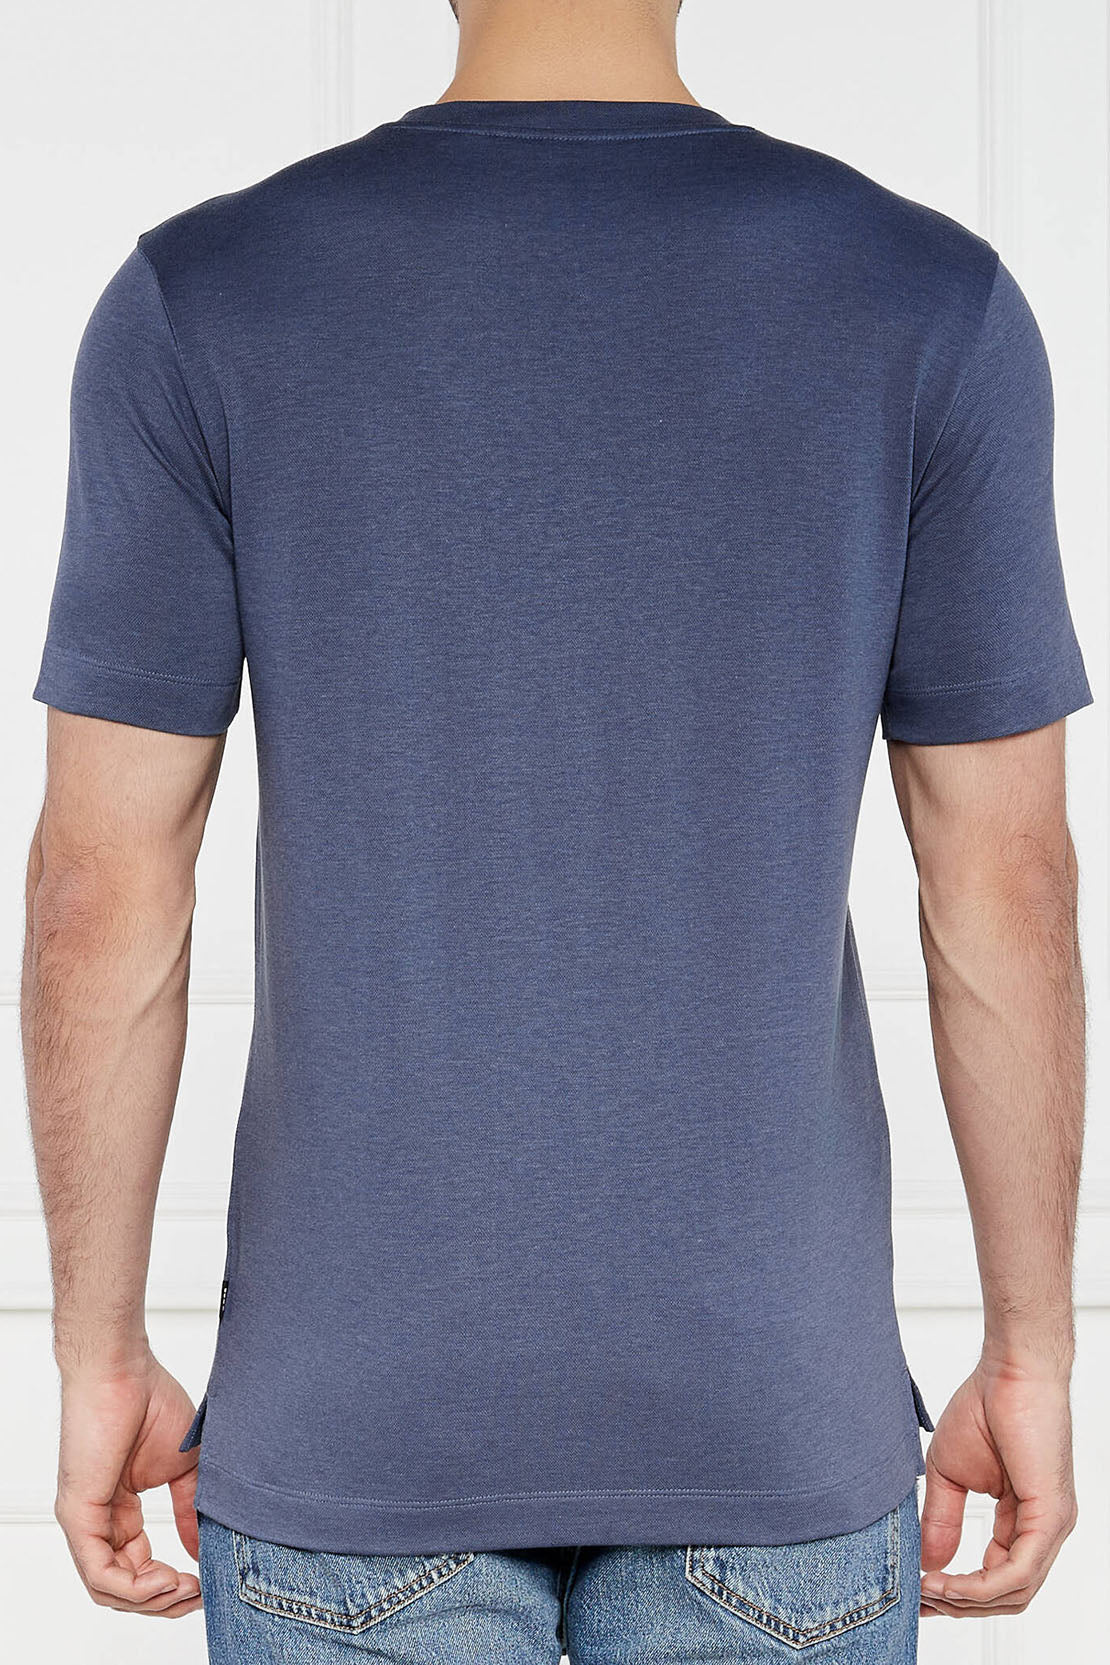 BOSS - H-THOMPSON 57 Dark Blue Sport T-shirt in Pique Cotton Blend 50521129 412